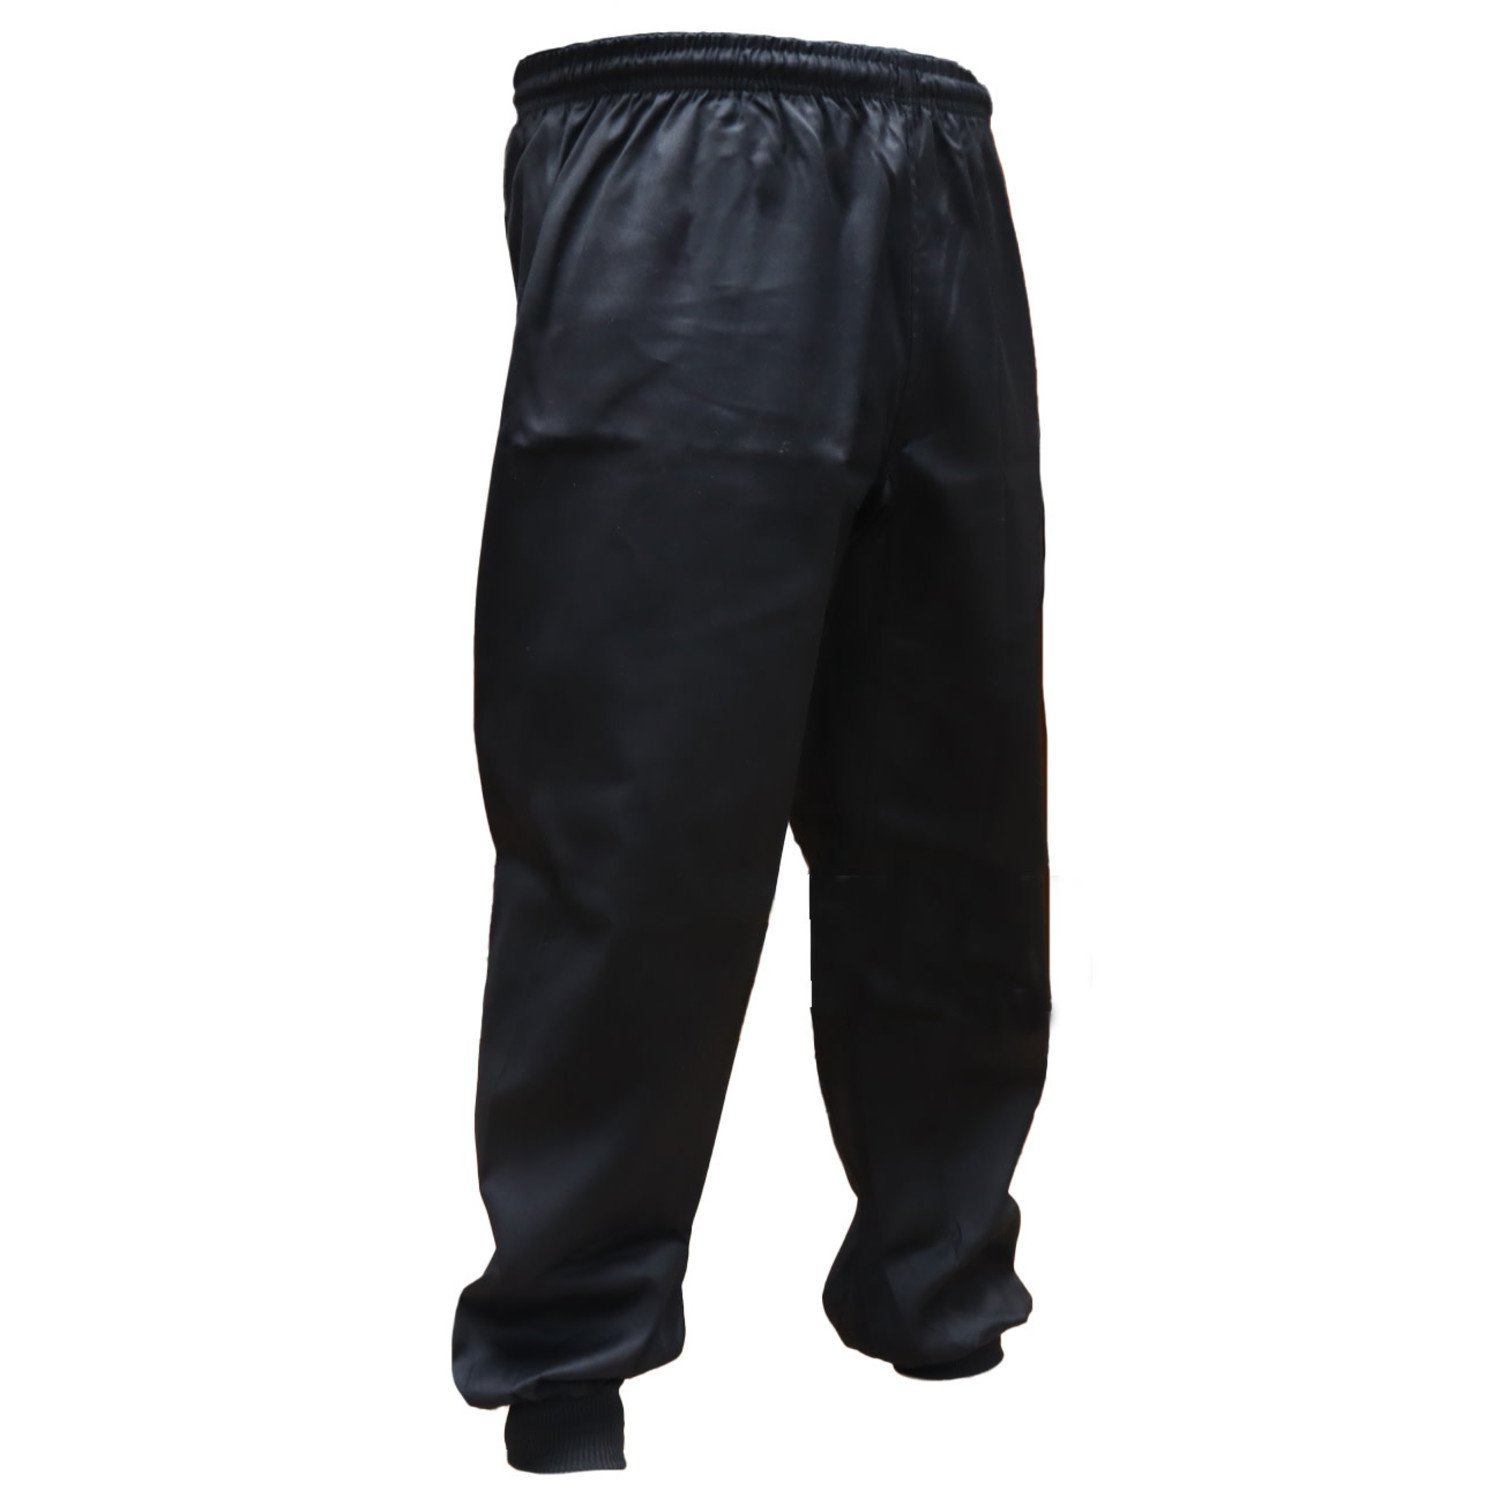 Malino Adult Kung Fu Trousers Cotton Black  8oz